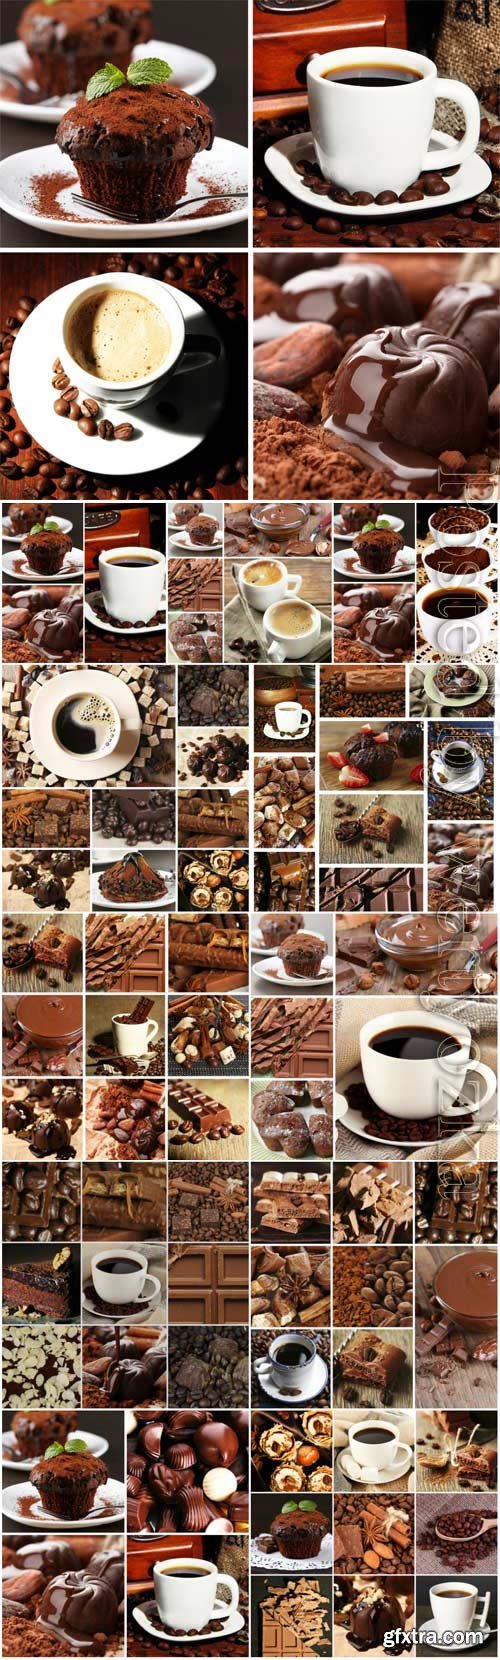 Chocolate and coffee stock photo